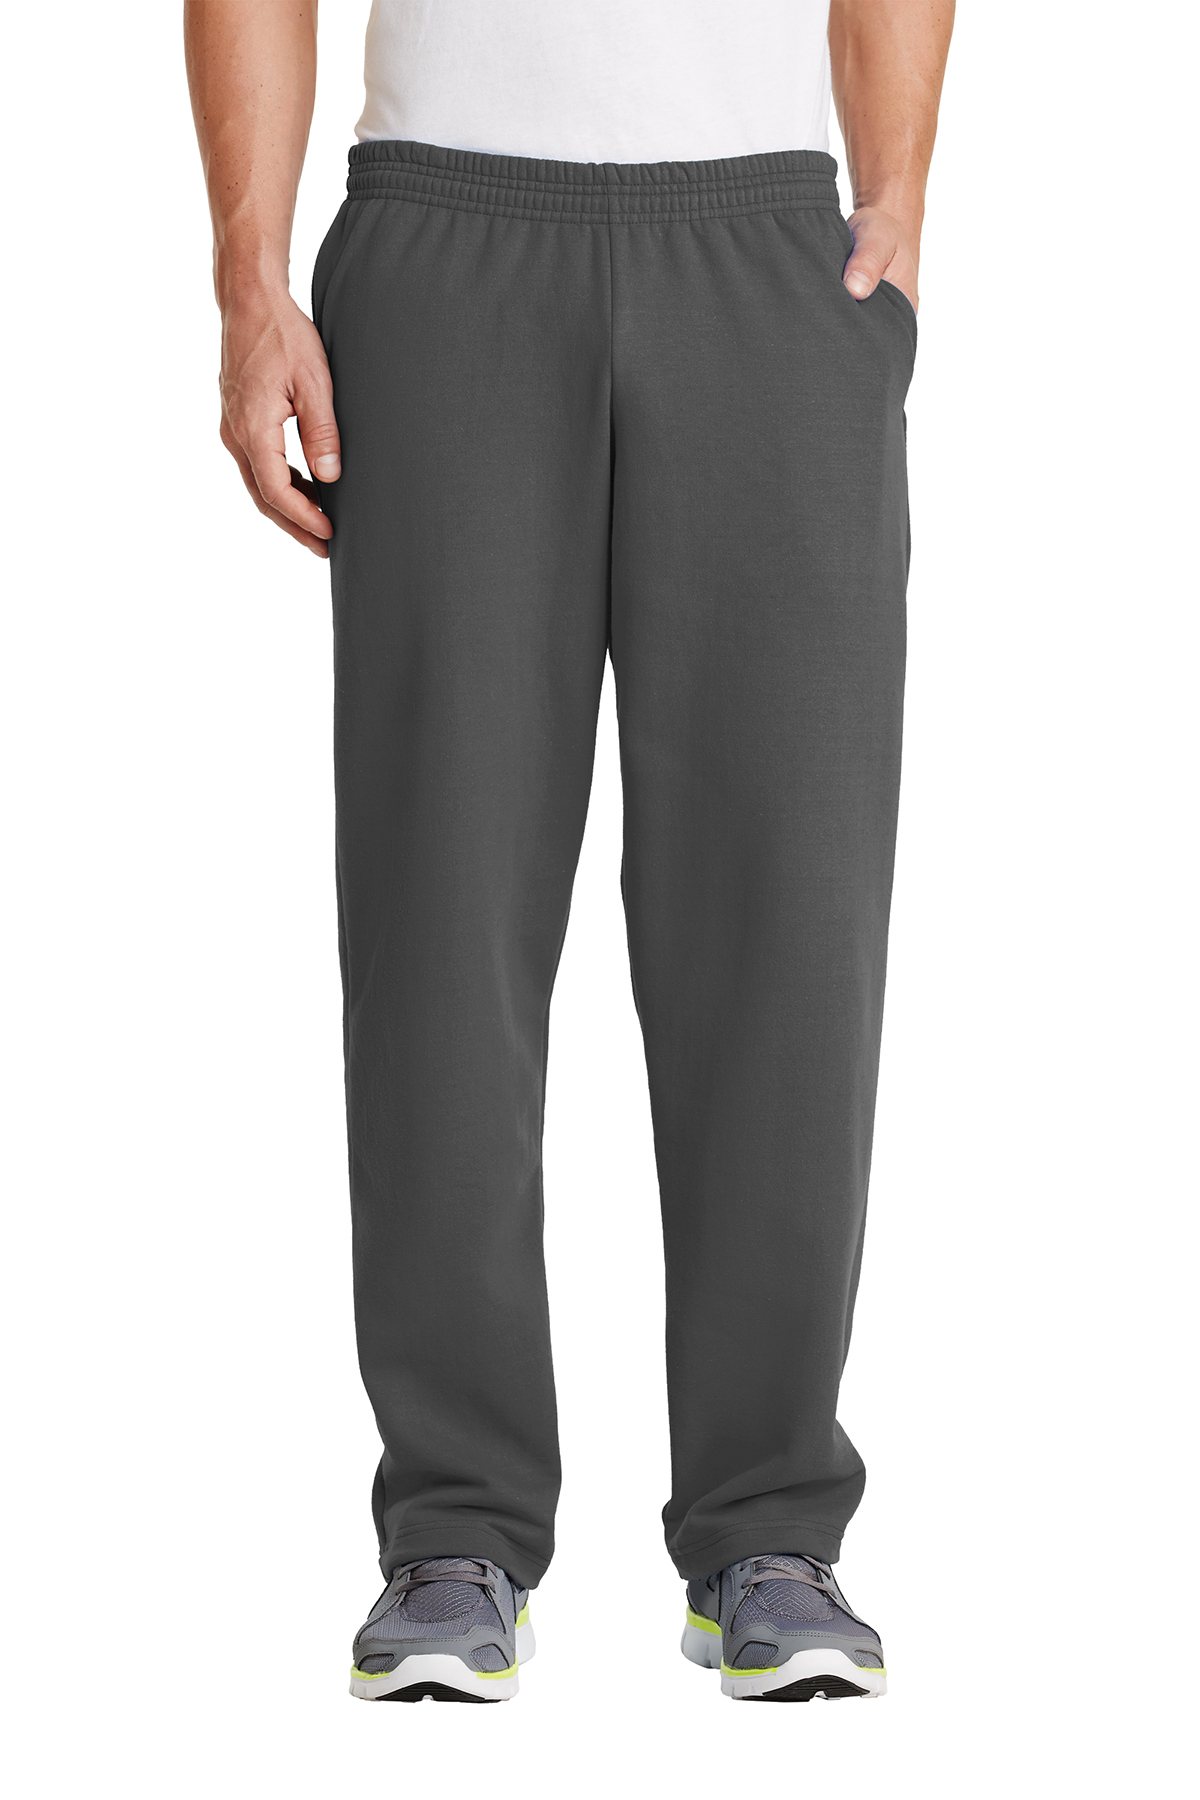 Port & Company Sweatpants with Pockets 